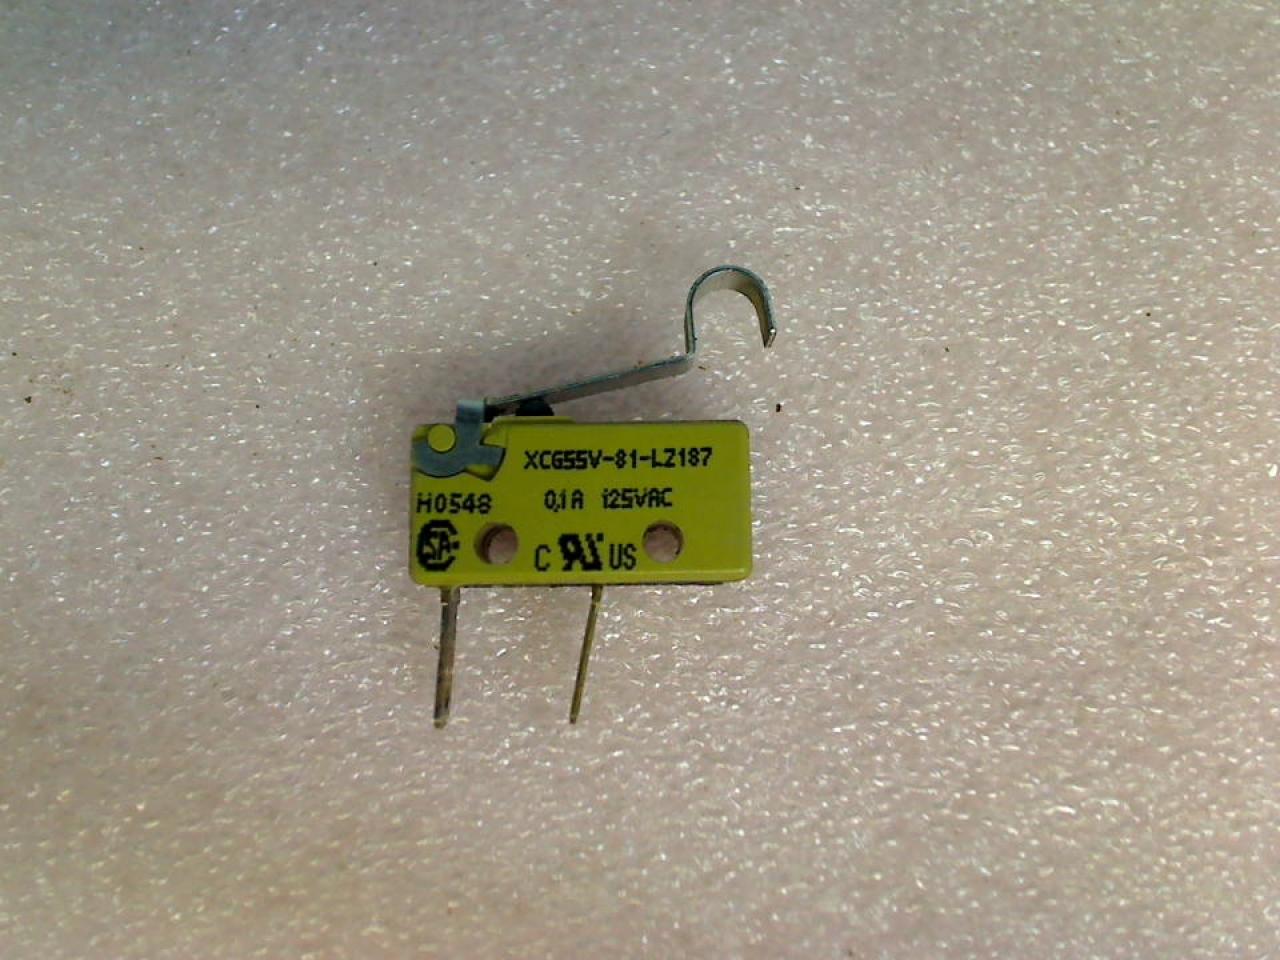 Micro Switch Sensor XCG55V-81-LZ187 Surpresso S60 -2